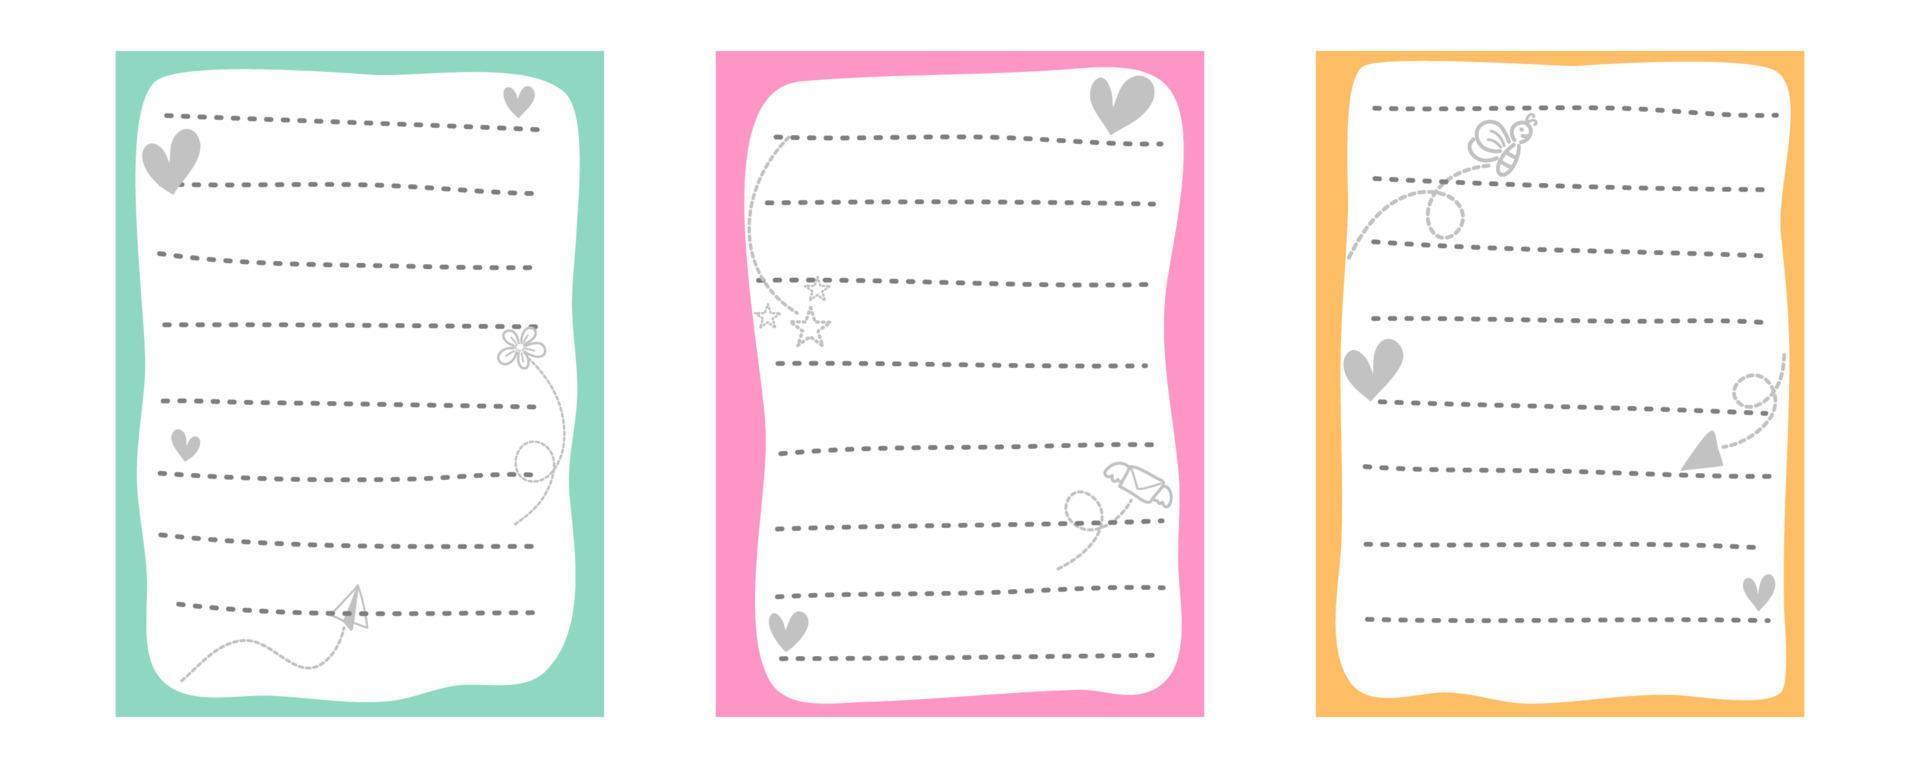 Cute note paper design vector